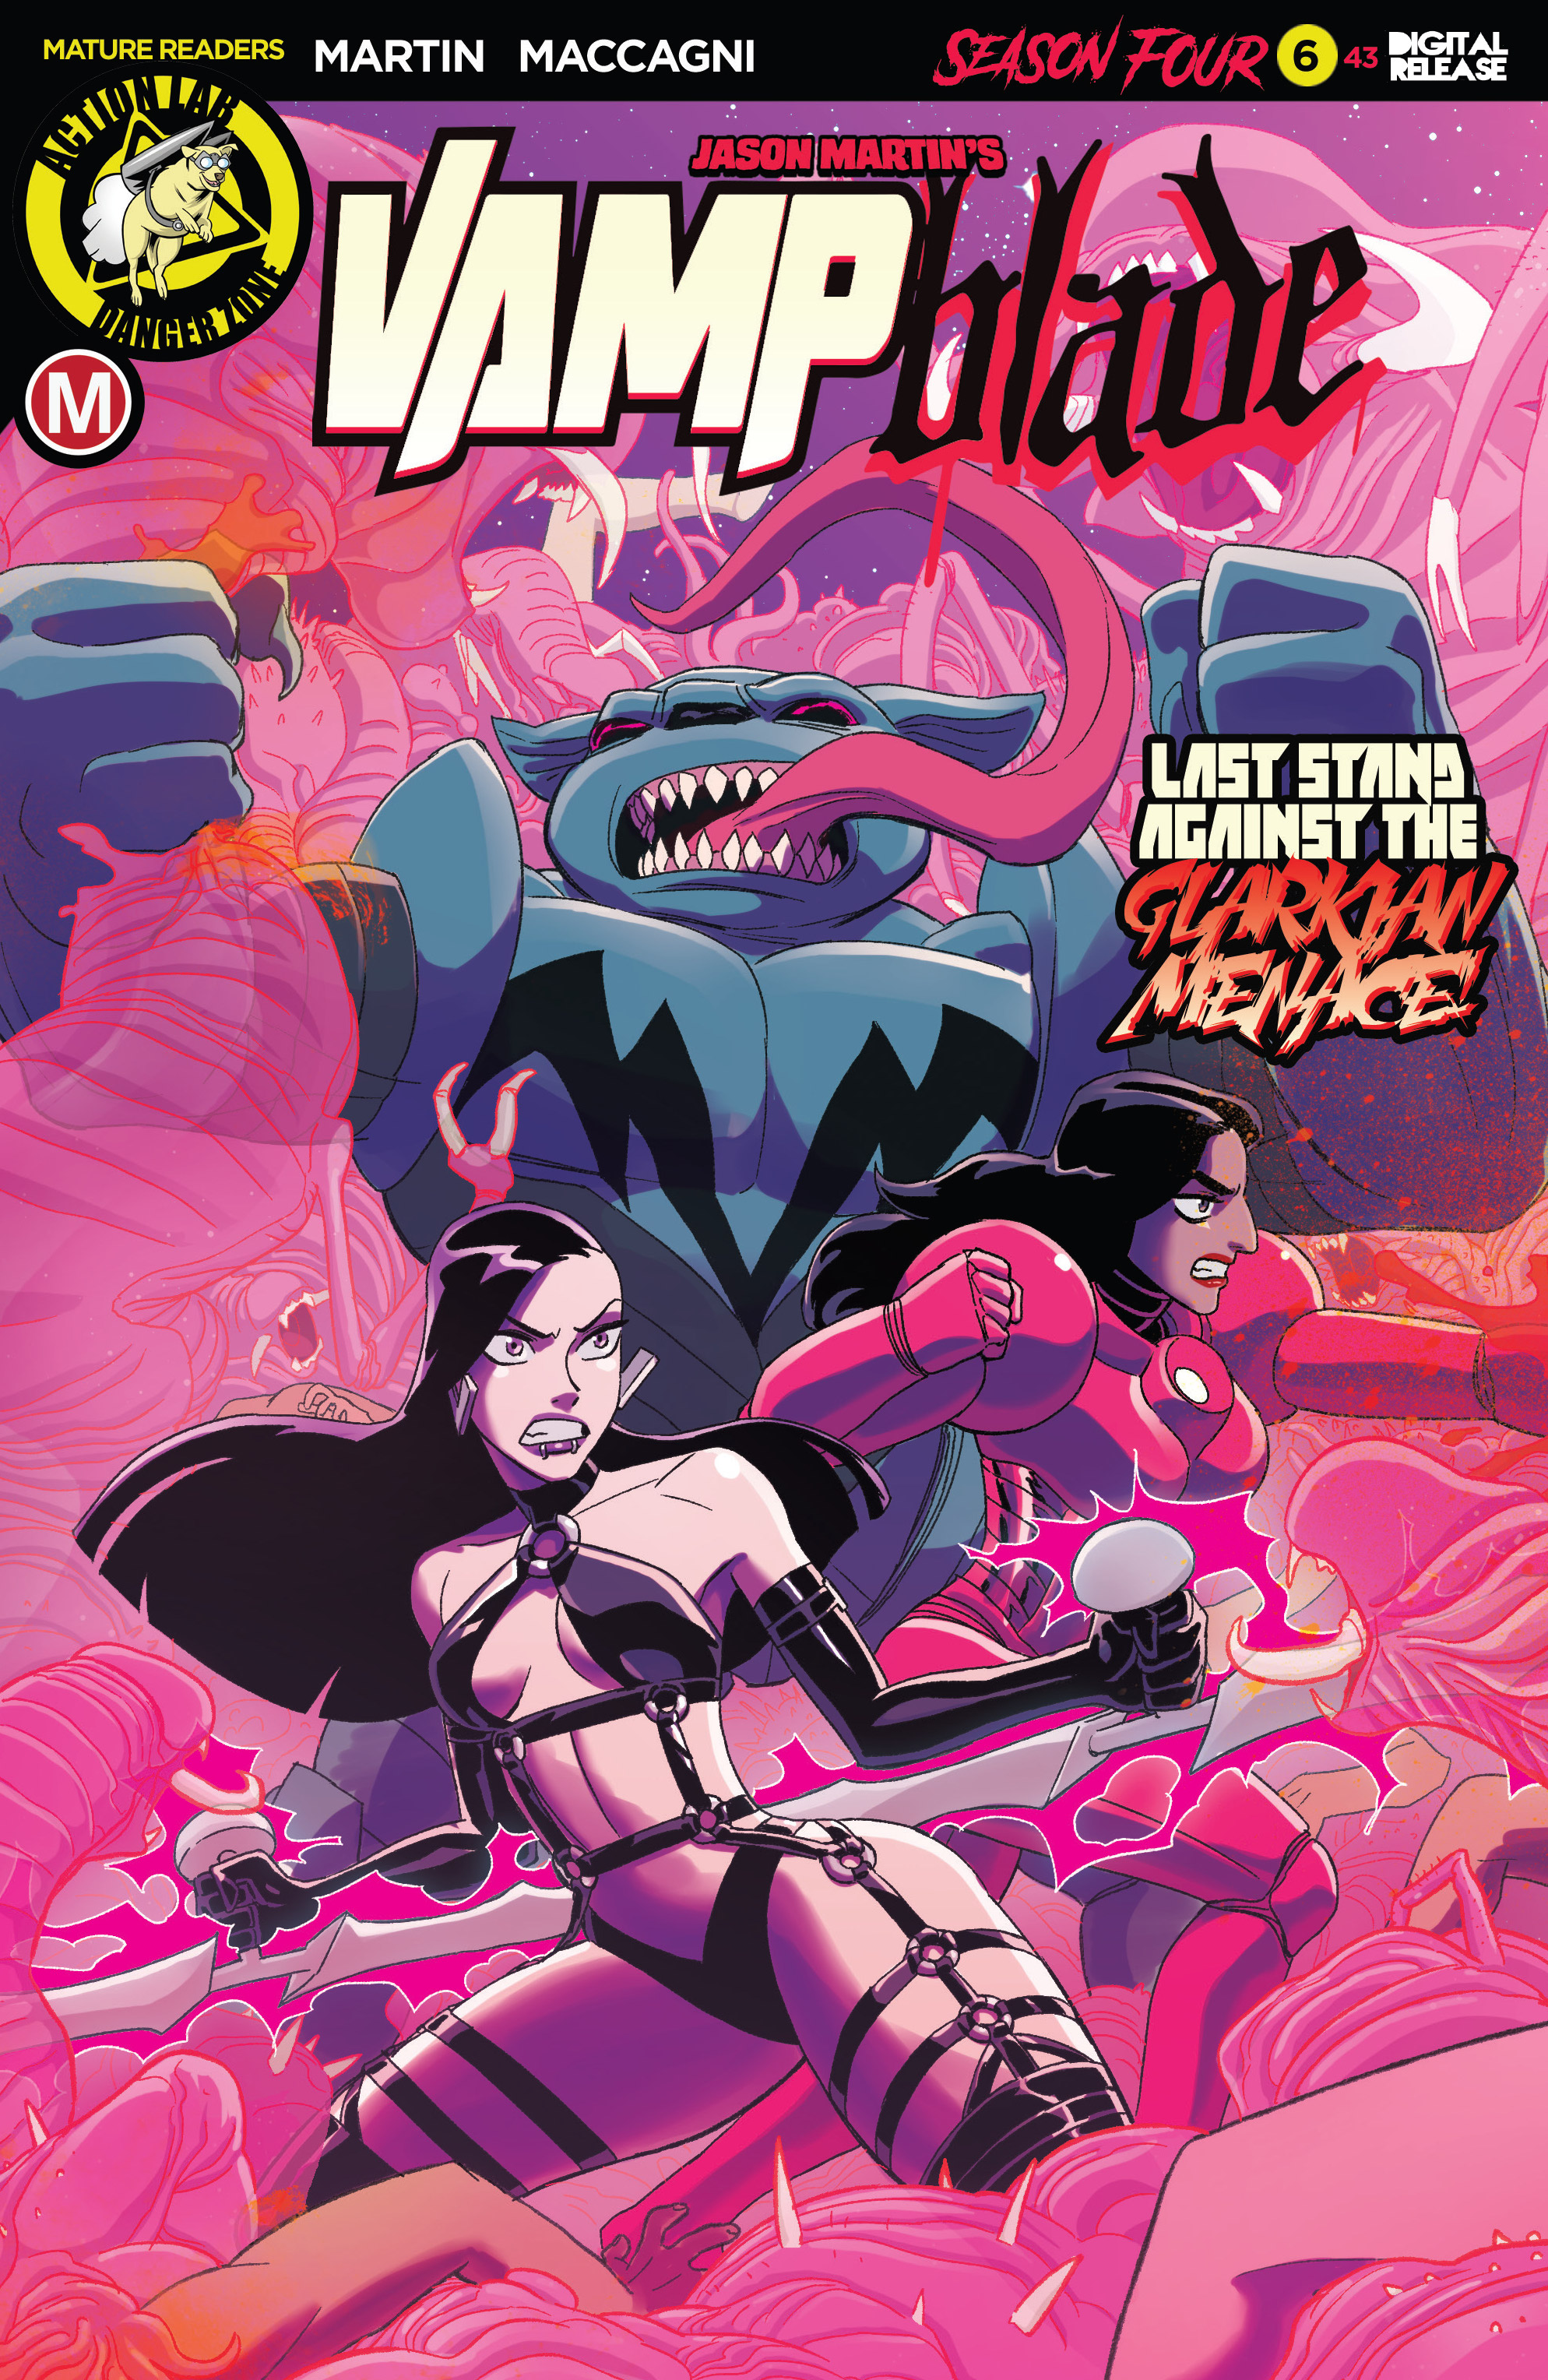 Read online Vampblade Season 4 comic -  Issue #6 - 1